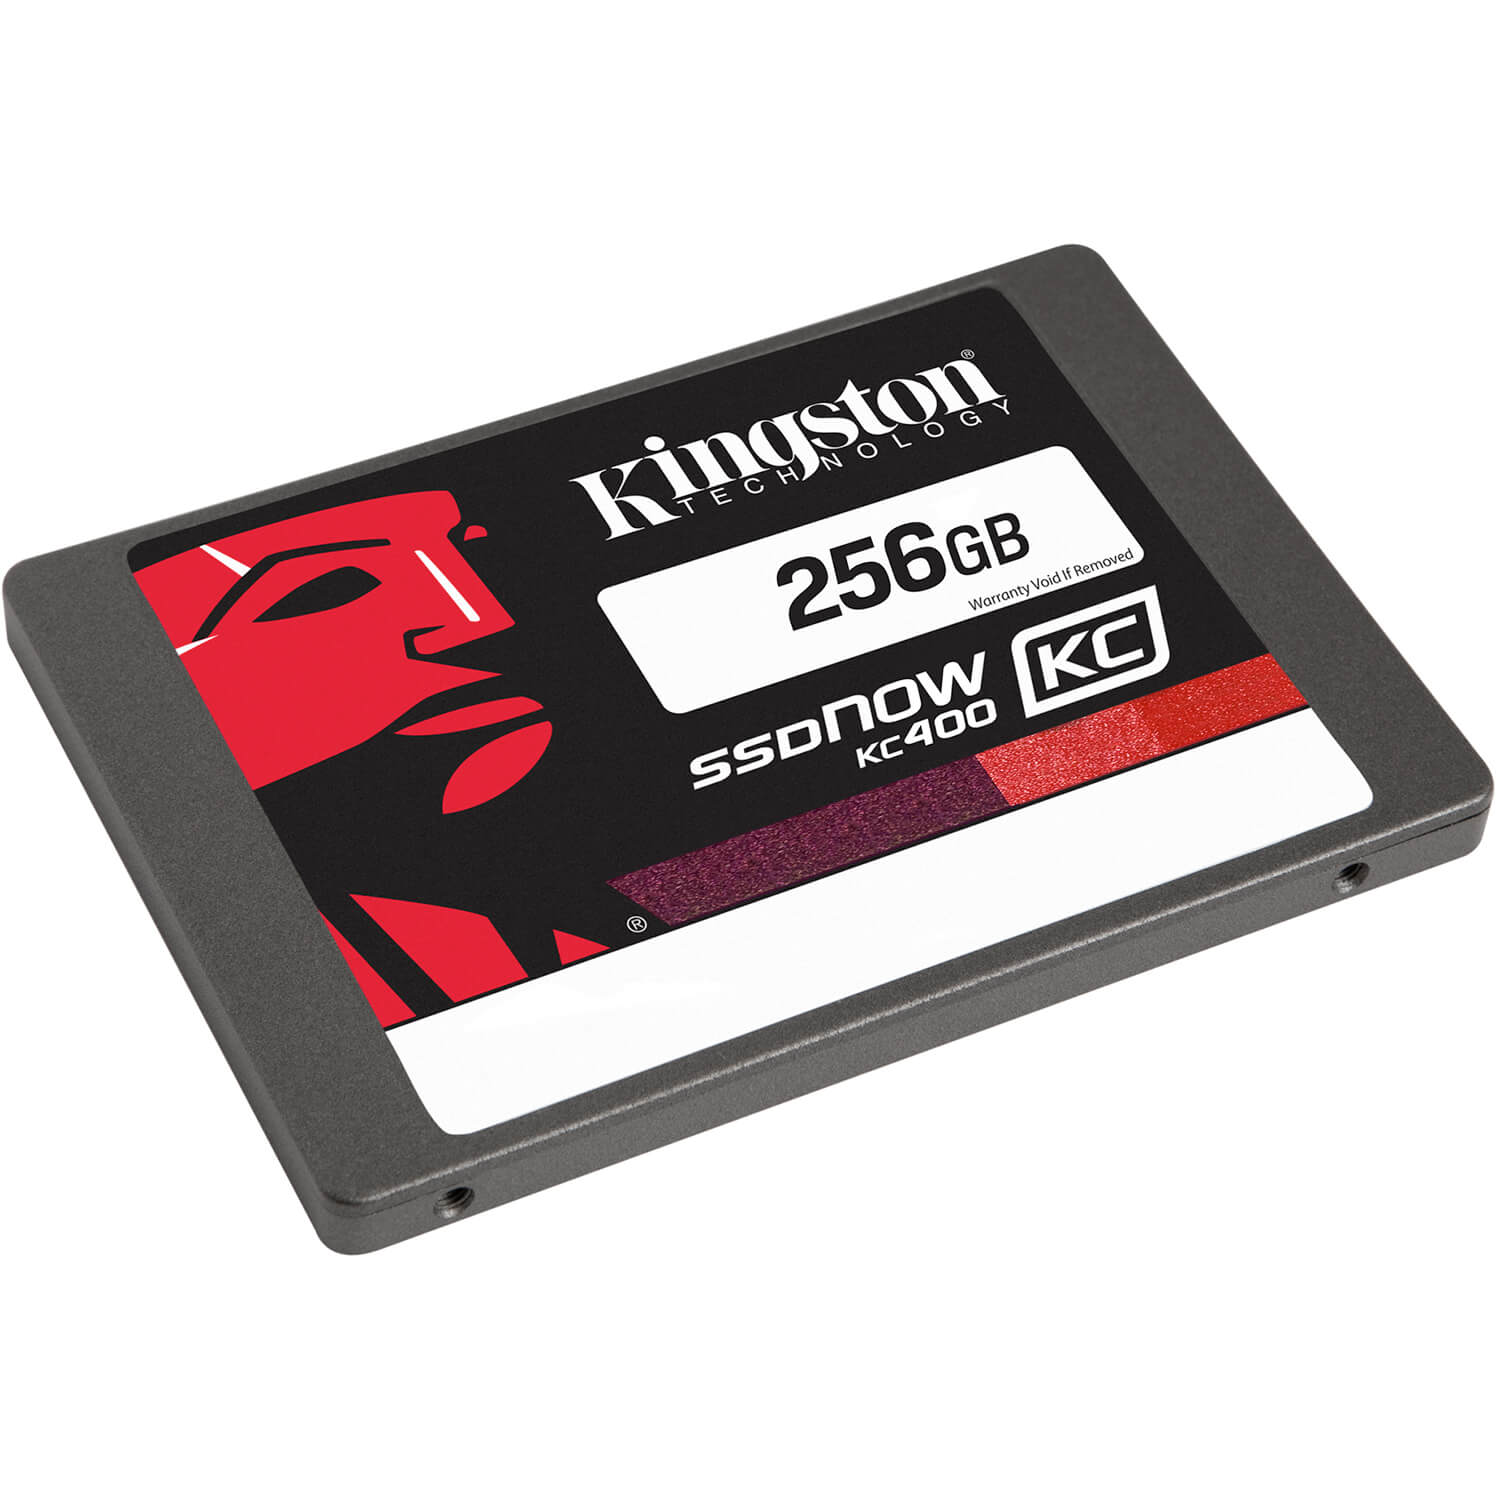  SSD Kingston KC400, 256GB, SATA-III, 2.5 inch 